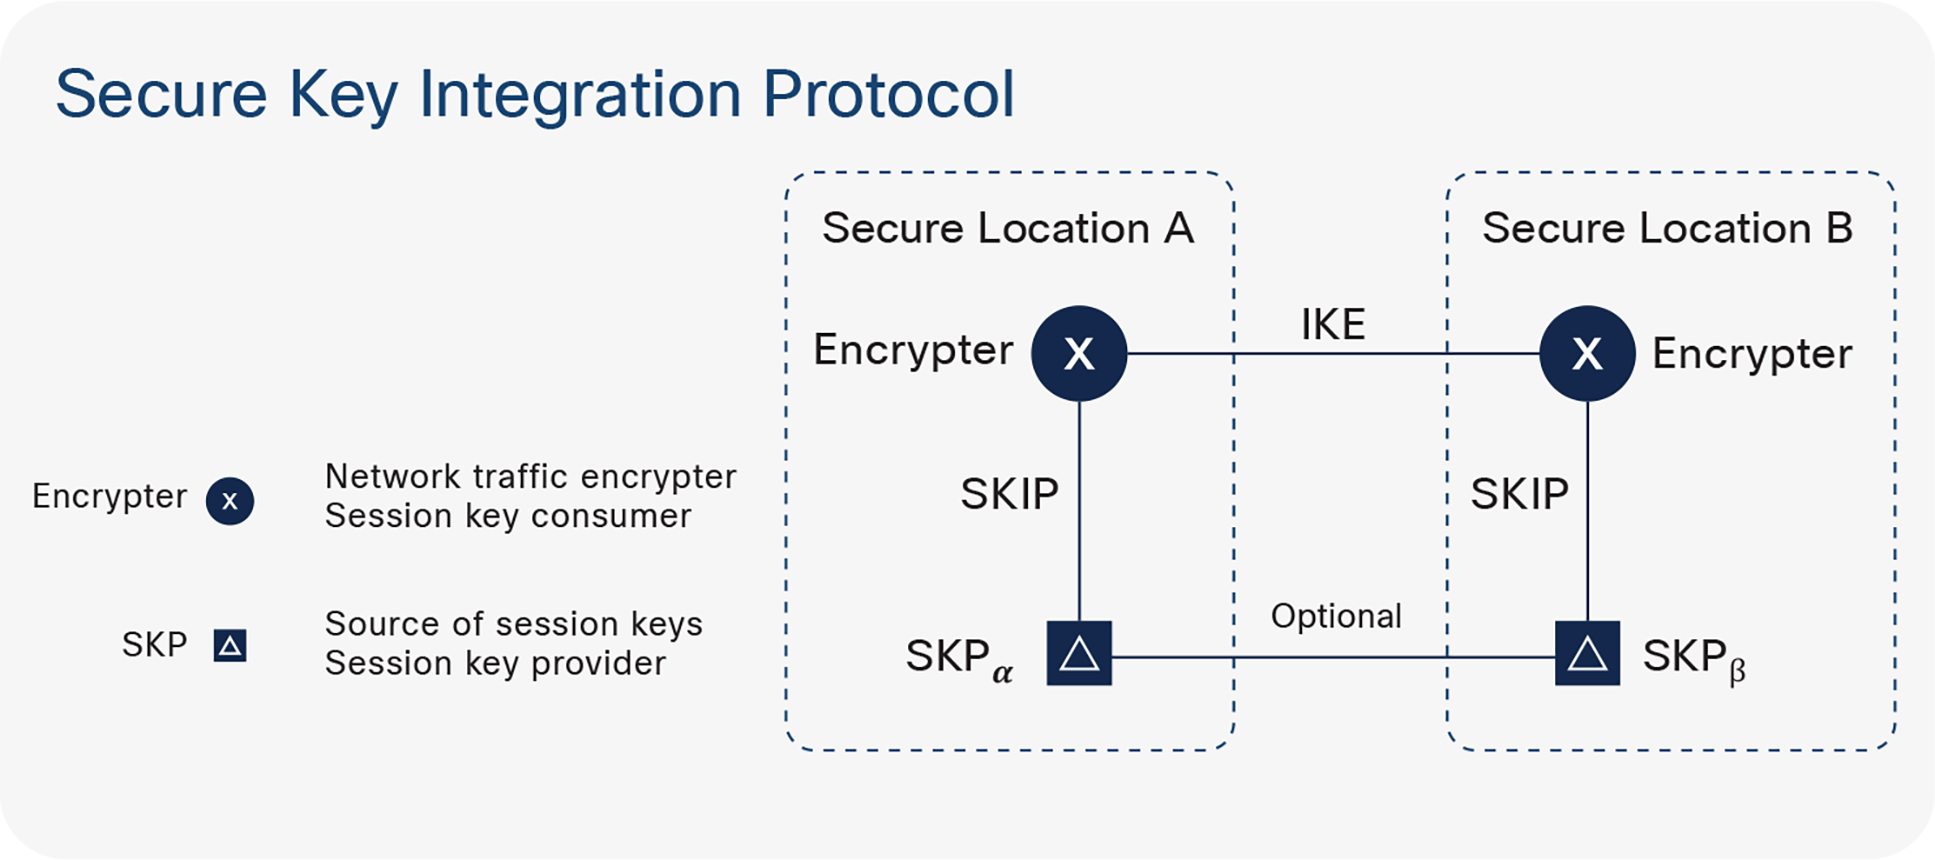 How Secure Key Integration Protocol works